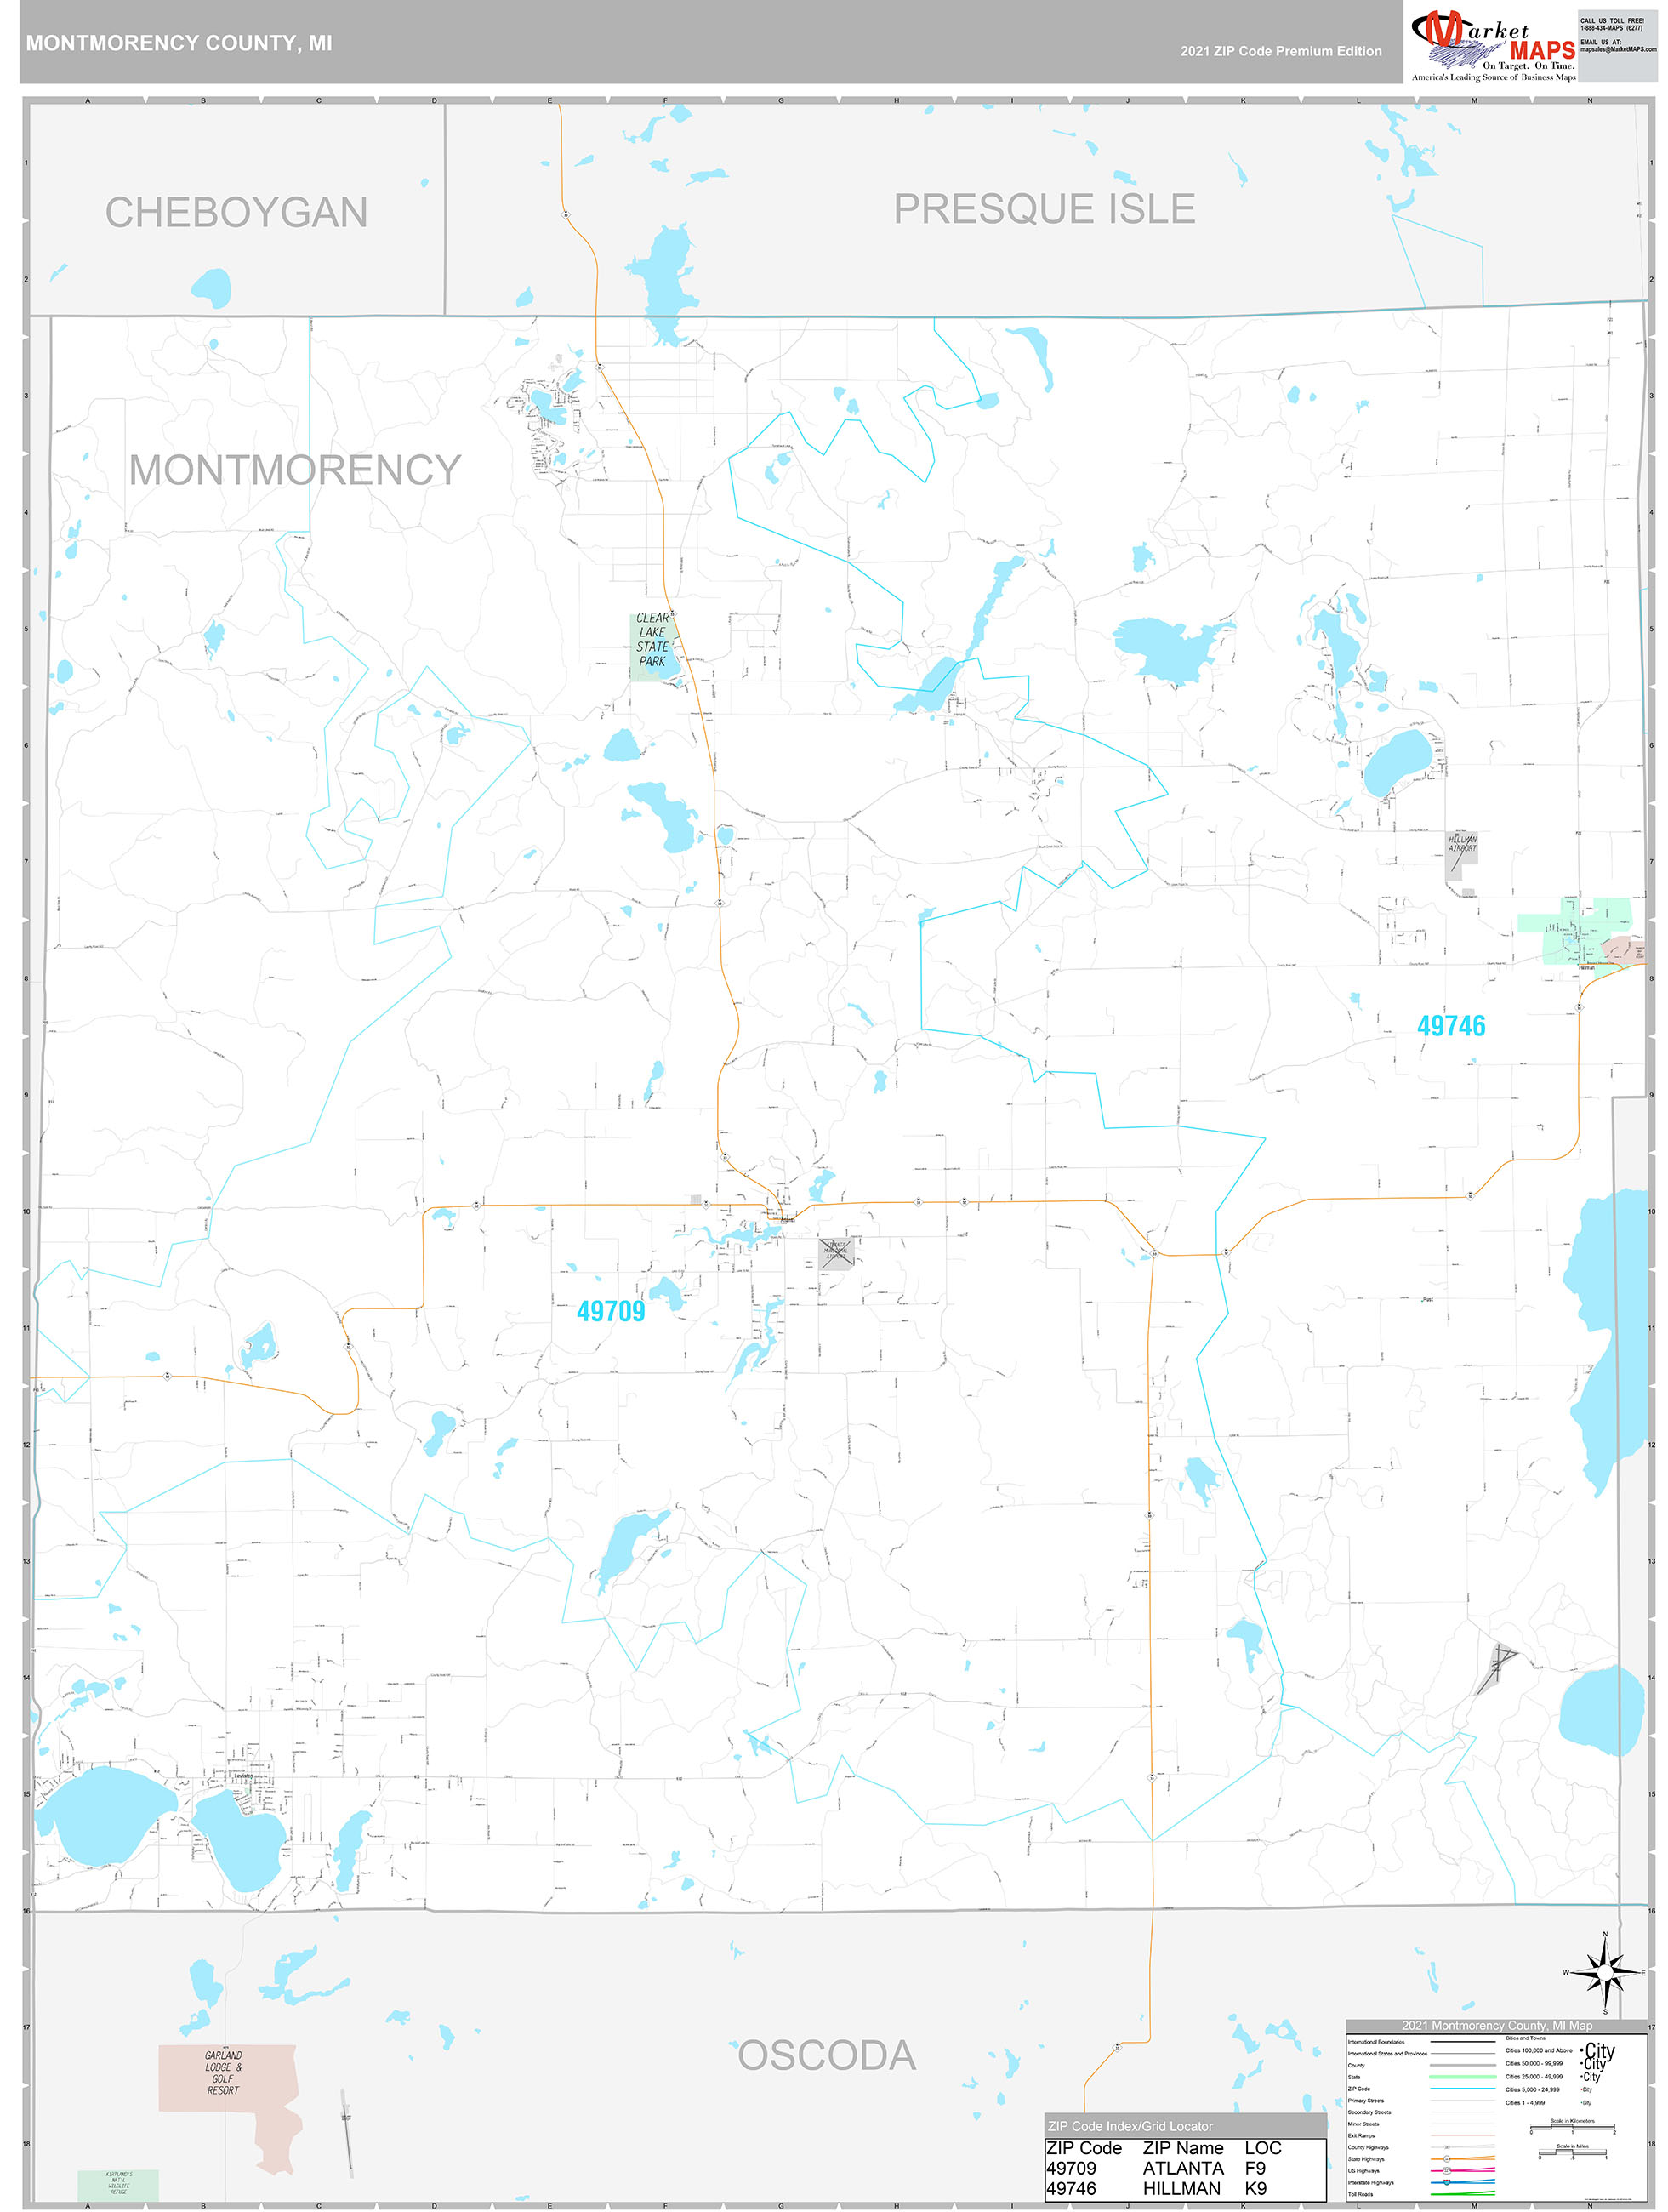 Montmorency County Mi Wall Map Premium Style By Marketmaps 2393